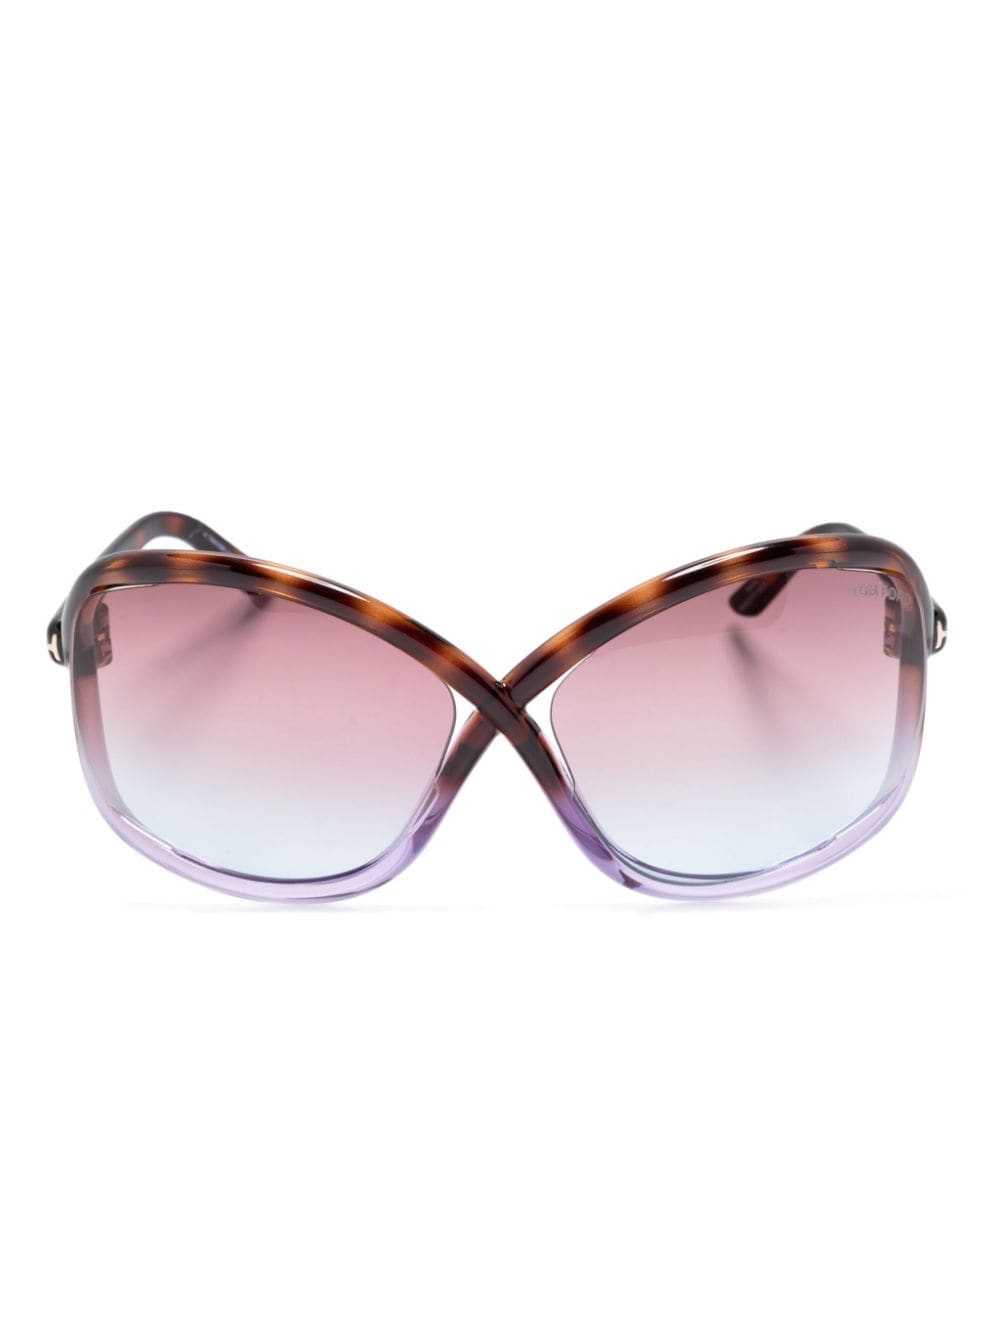 TOM FORD Eyewear Bettina oversize sunglasses - Brown von TOM FORD Eyewear